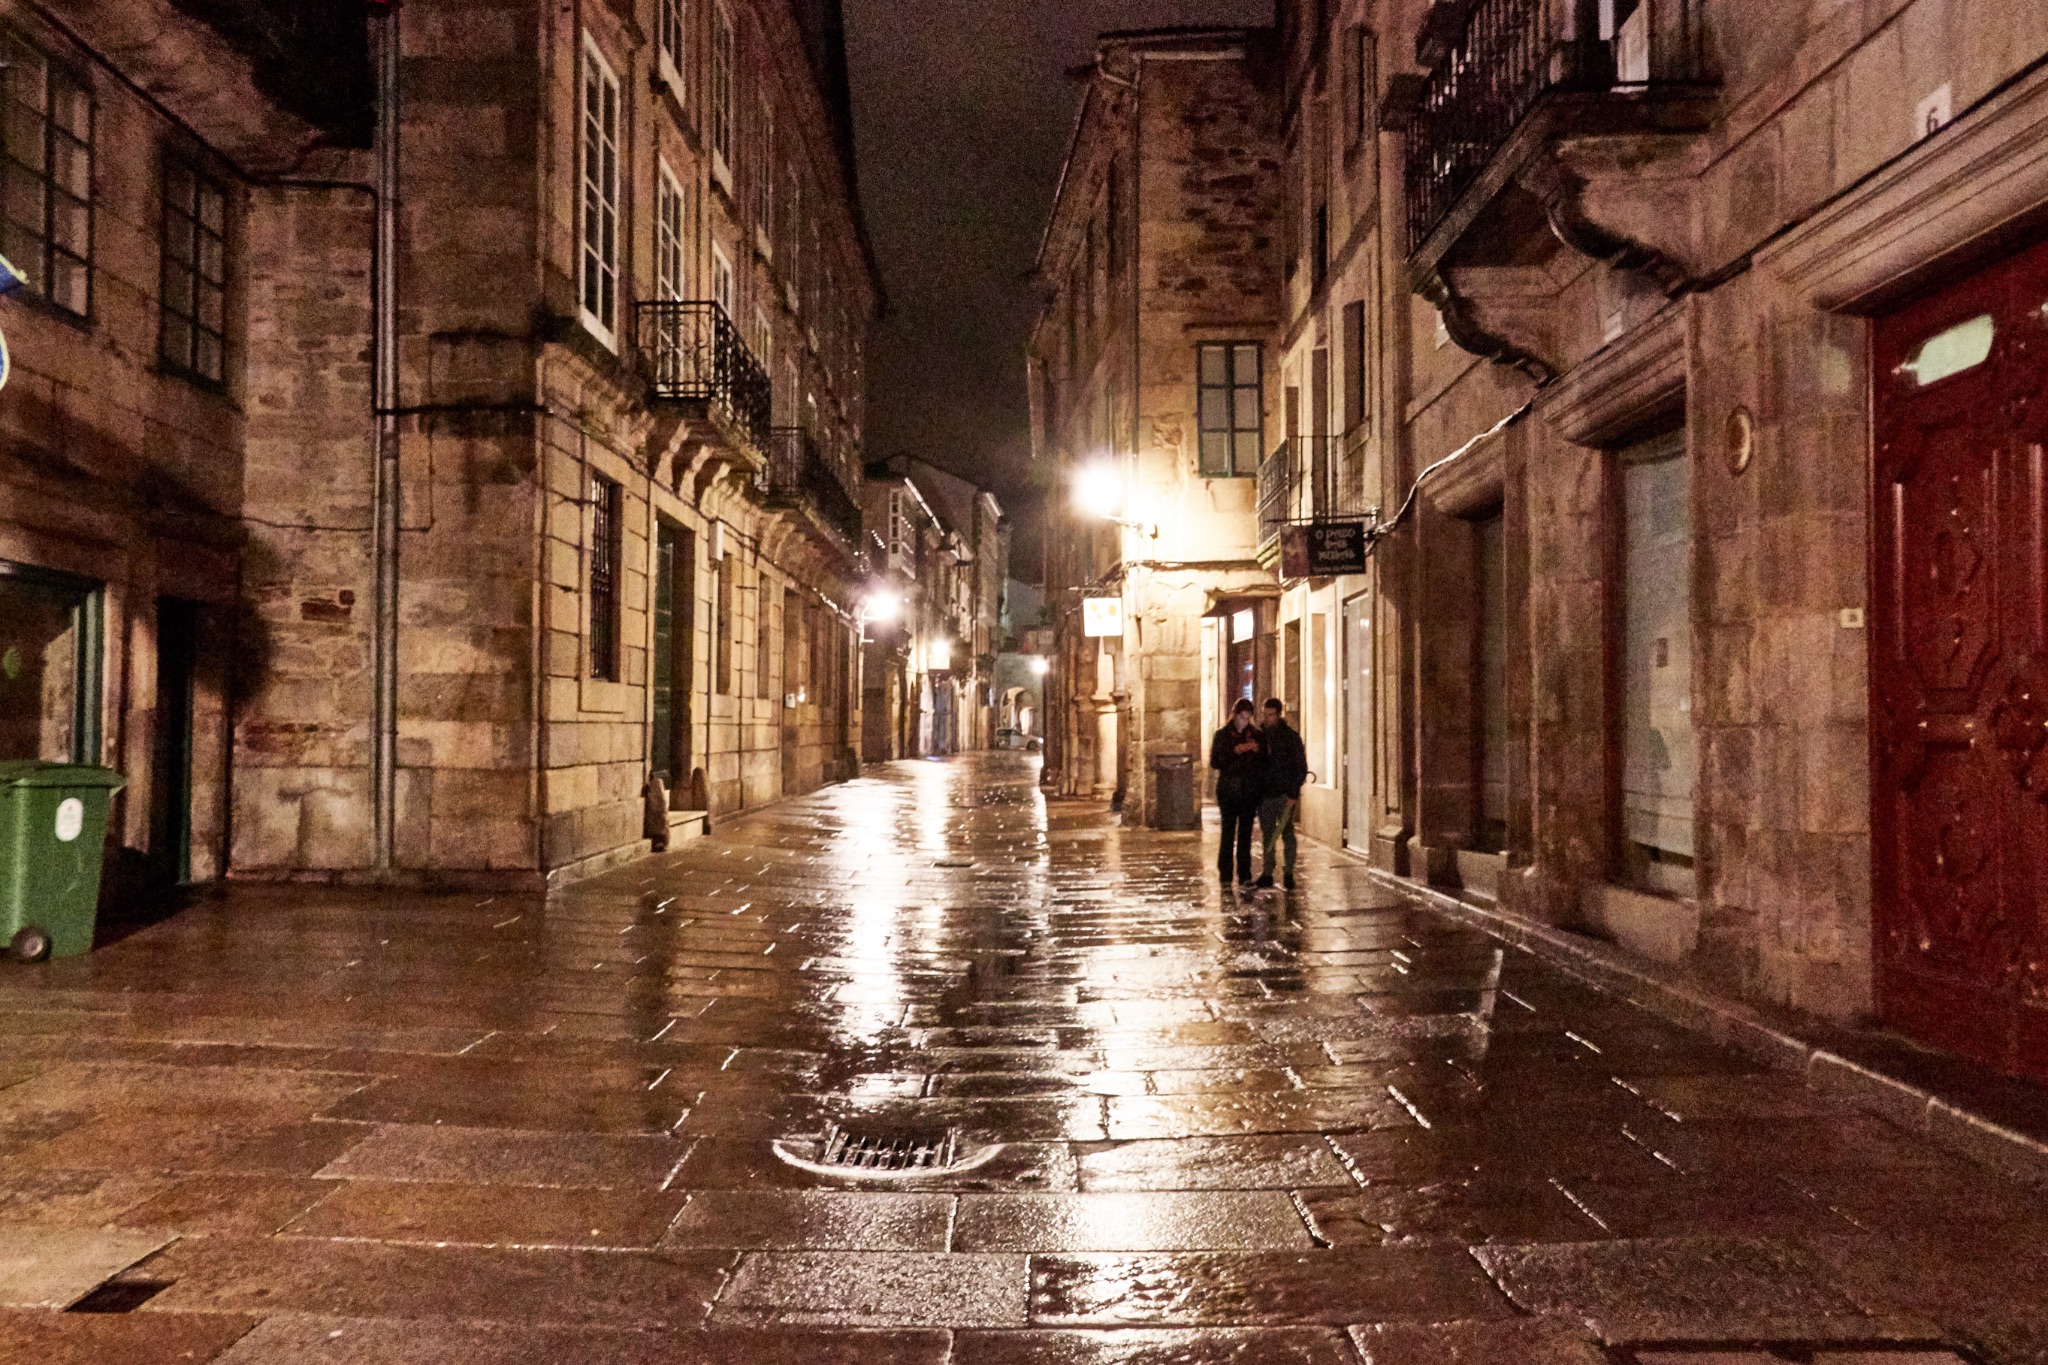 Night street in old town